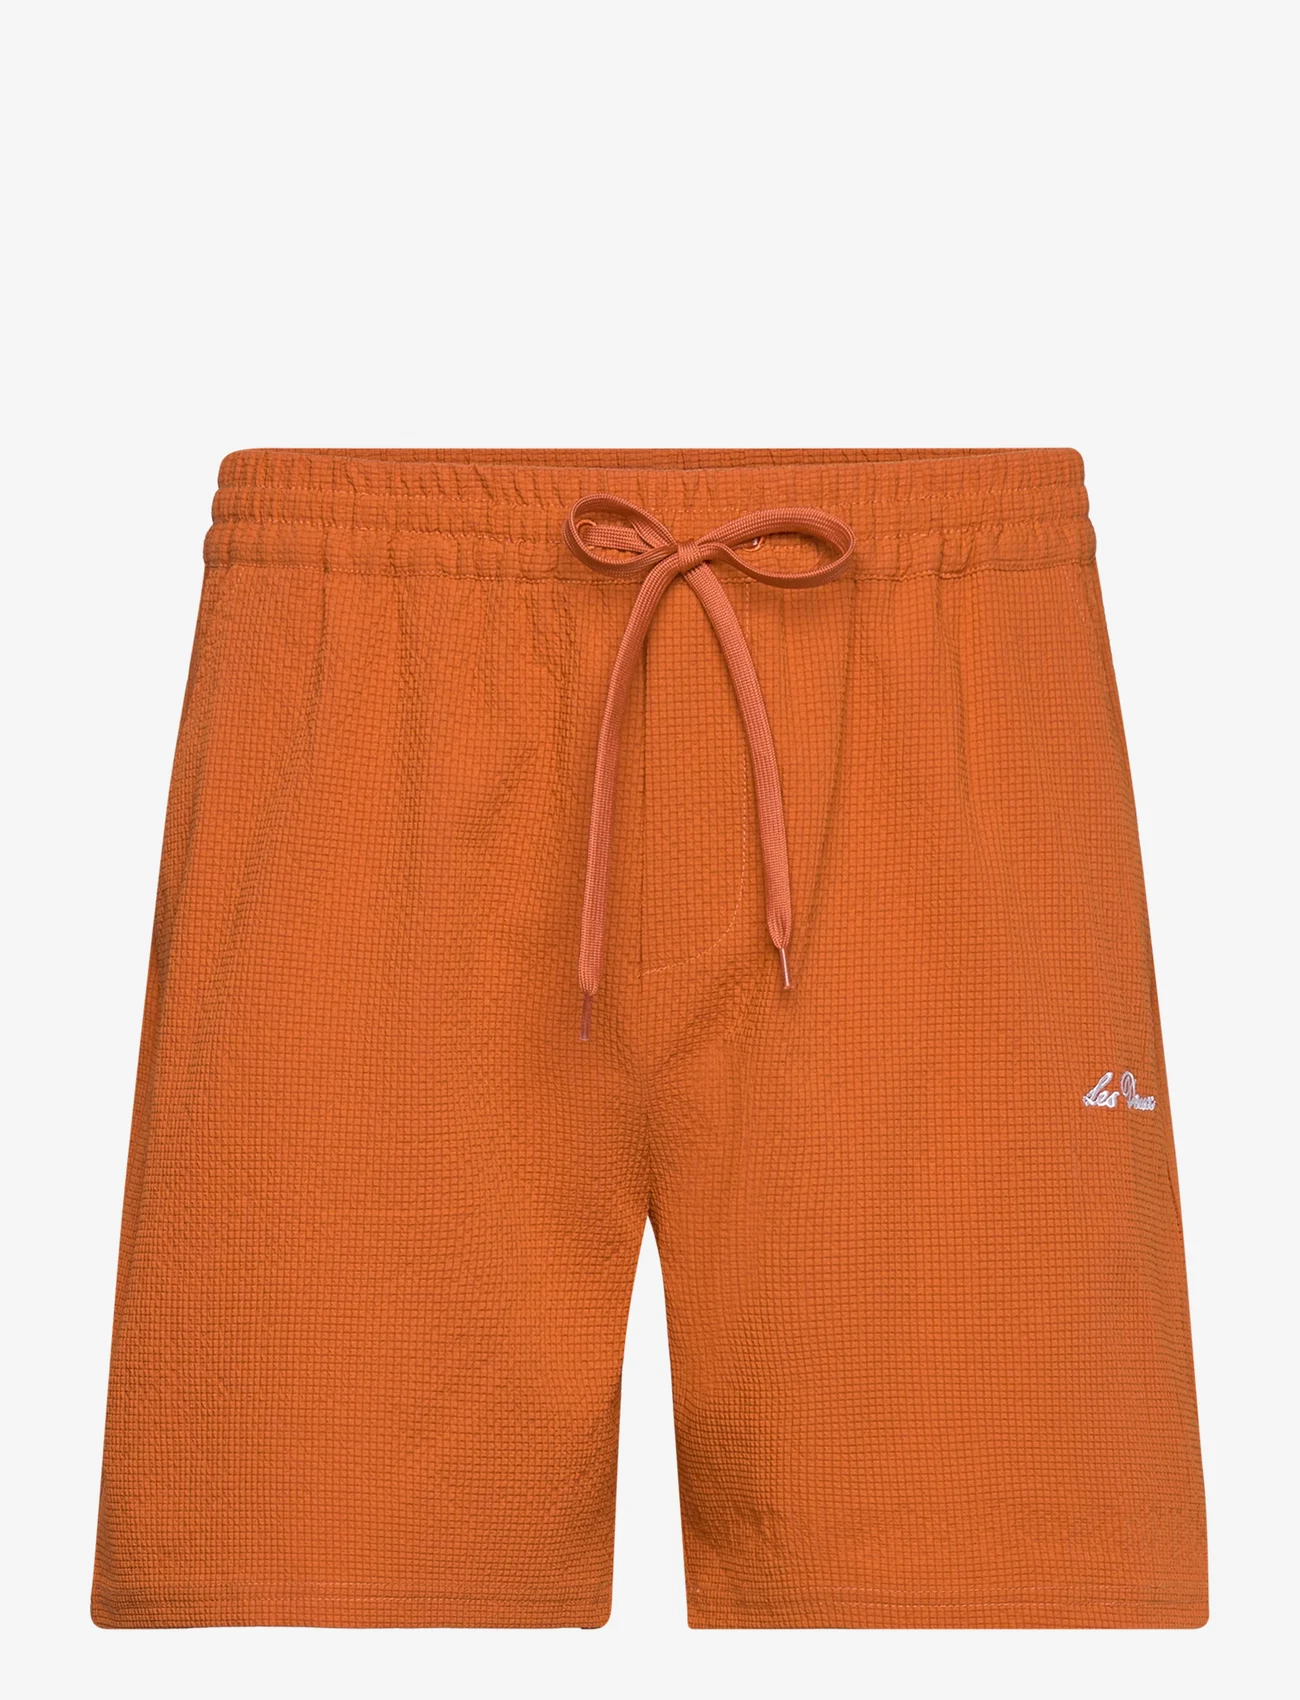 Les Deux - Stan Seersucker Swim Shorts 2.0 - ziemeļvalstu stils - court orange - 1